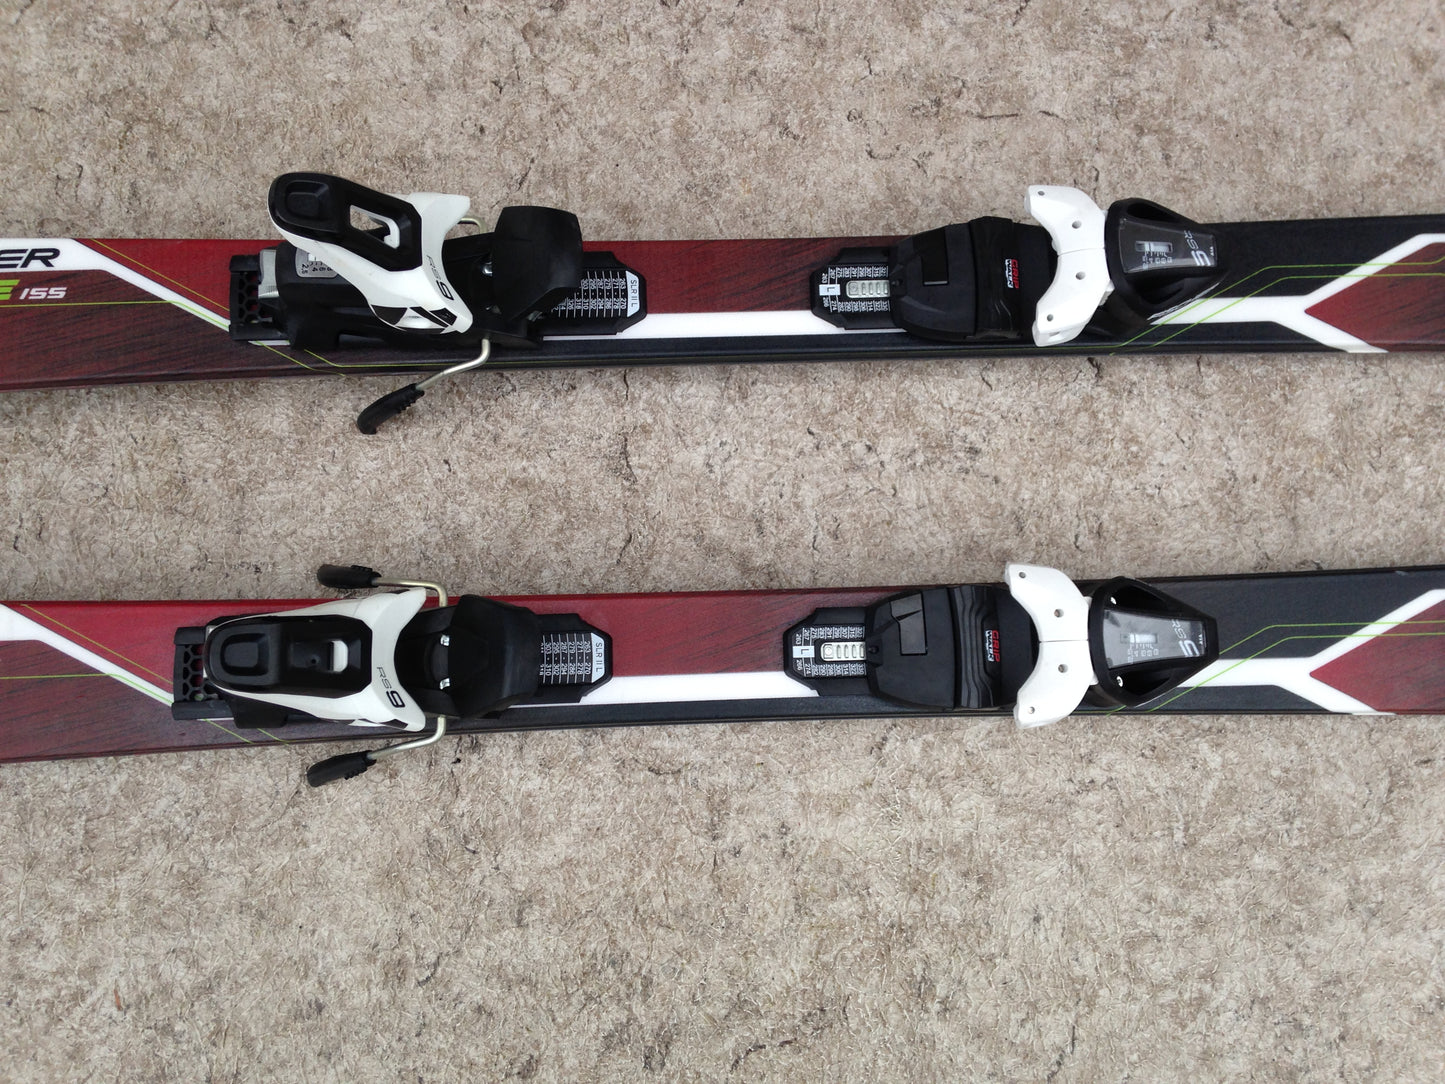 Ski 155 Fischer Fuse Parabolic Red Black New Demo Model